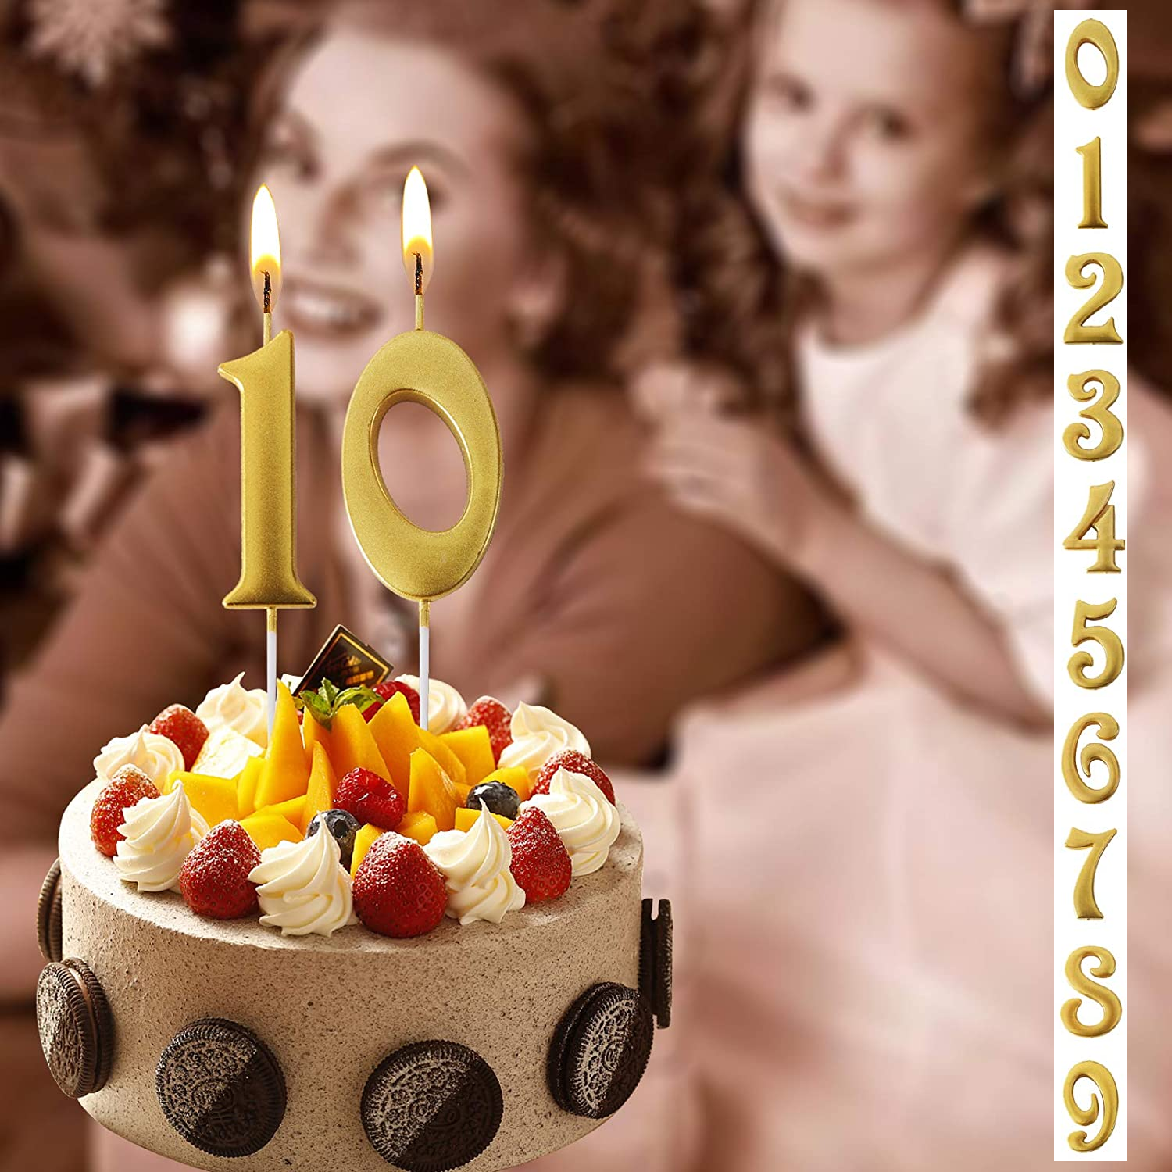 Cake/Cupcake Candle - 'Ornate' gold candle - # 5 - Rampant Coffee Company